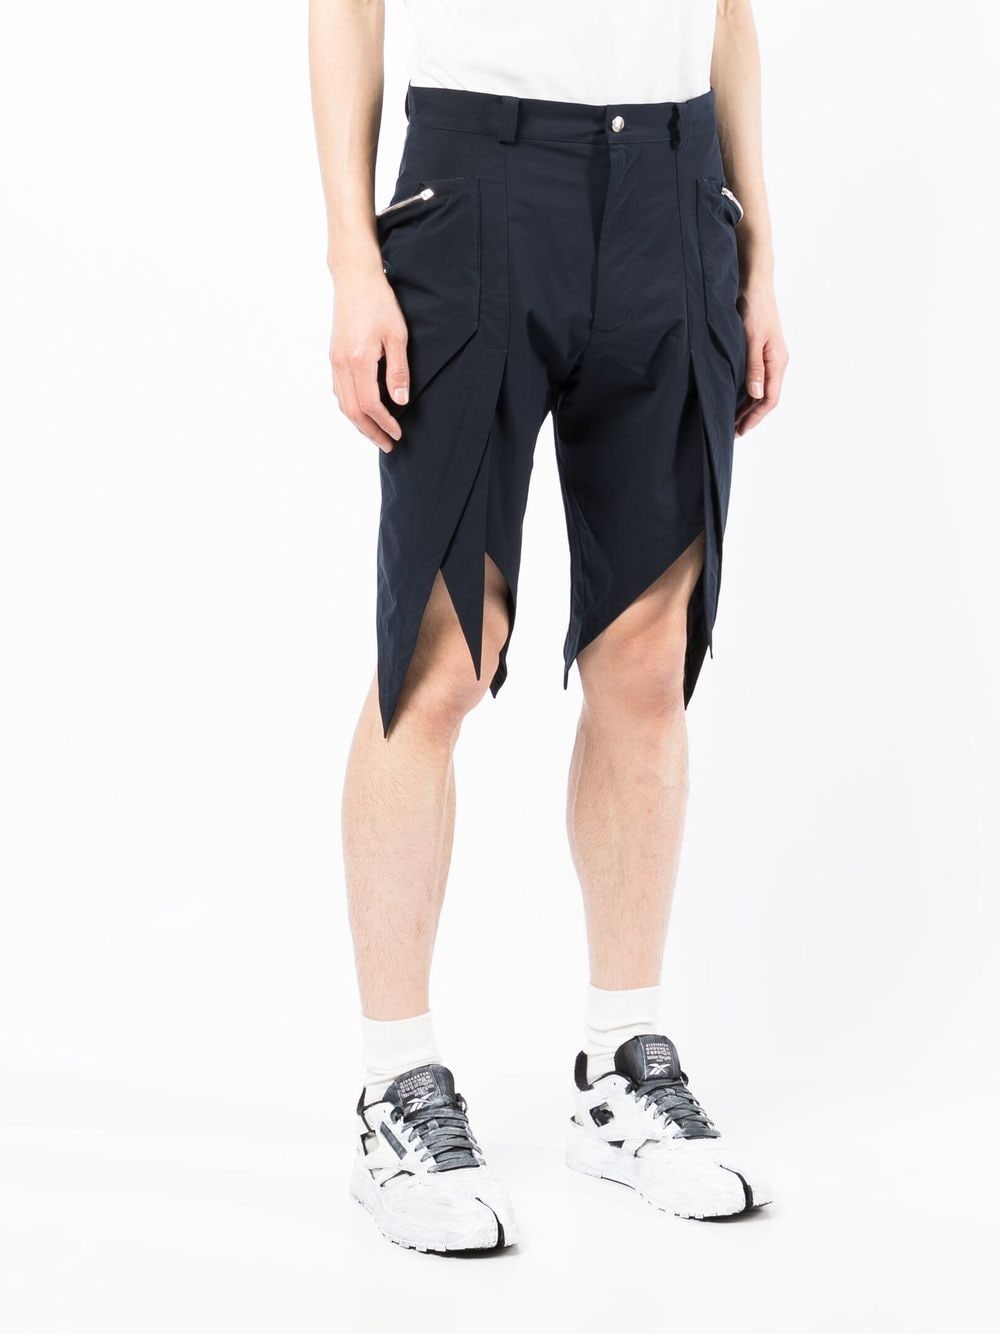 Kiko Kostadinov Torino Asymmetric Shorts - Farfetch